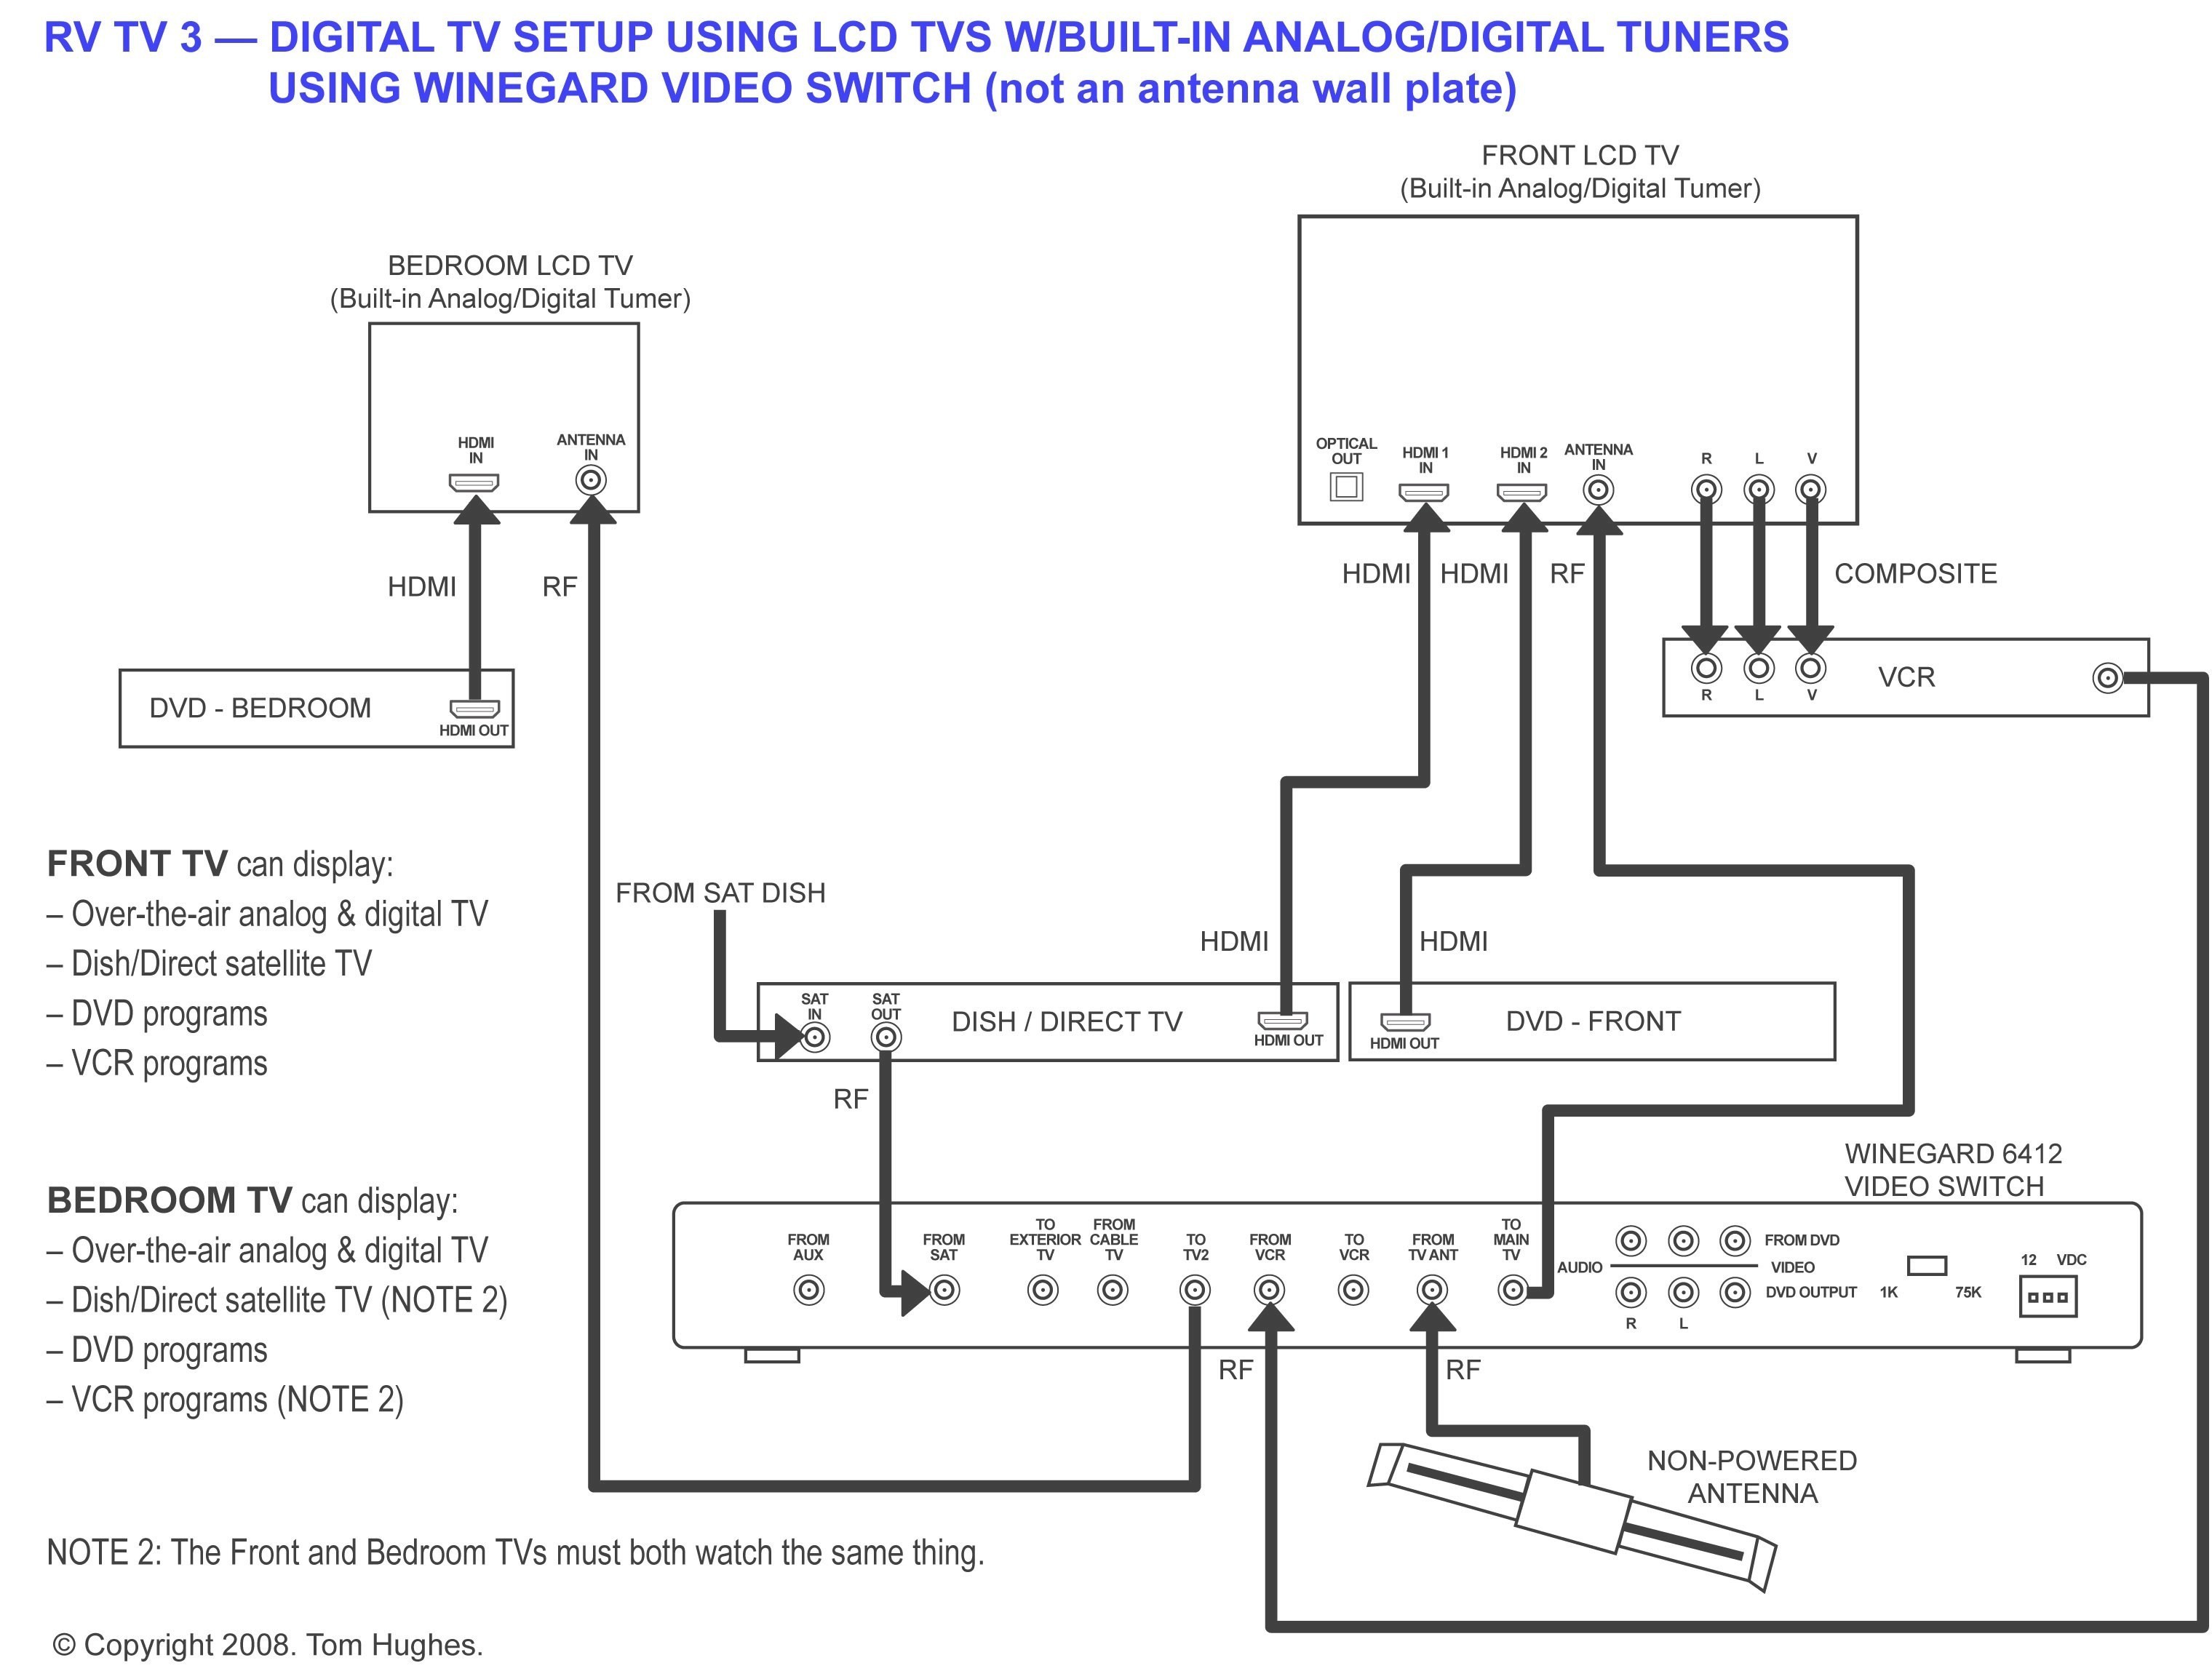 Directv Swm 8 Wiring Diagram Wrg 1178] Swm Splitter Wiring Diagram Of Directv Swm 8 Wiring Diagram